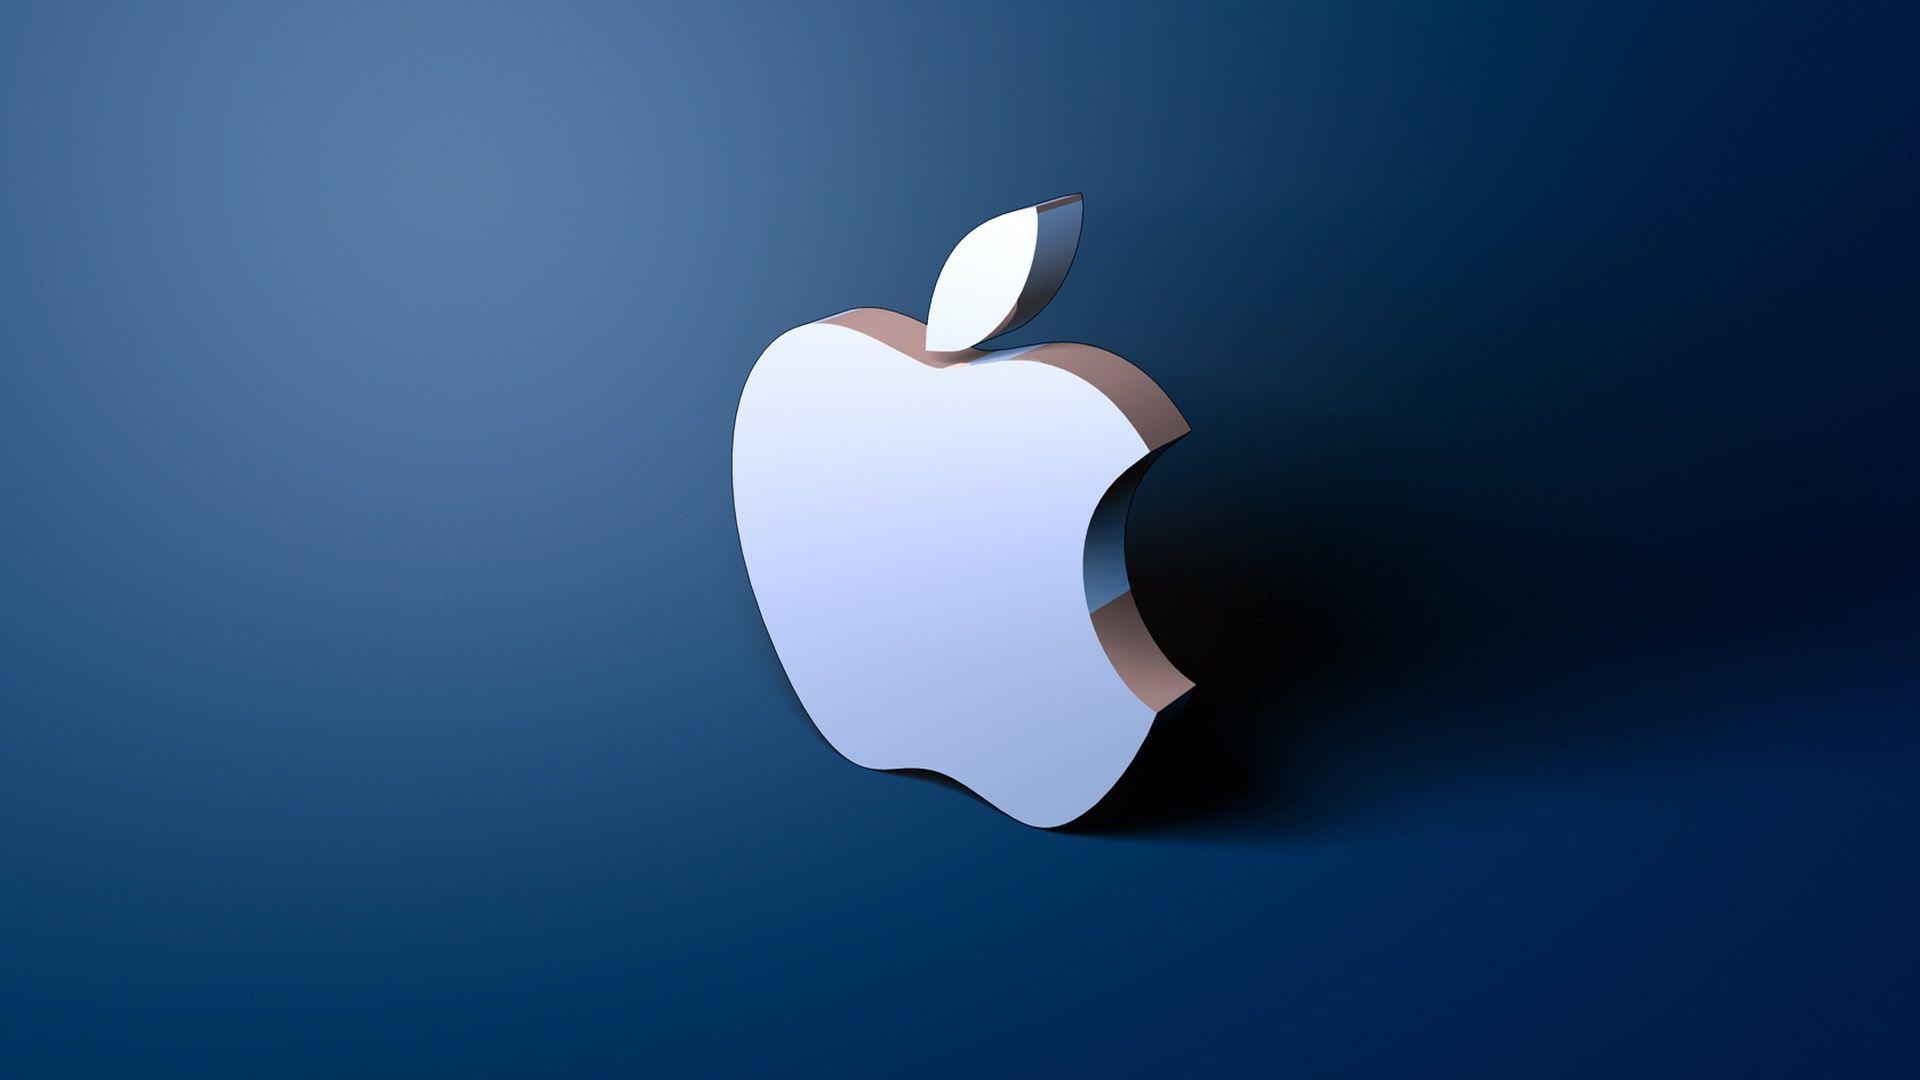 Download Apple Logo Design. Apple wallpaper, HD apple wallpaper